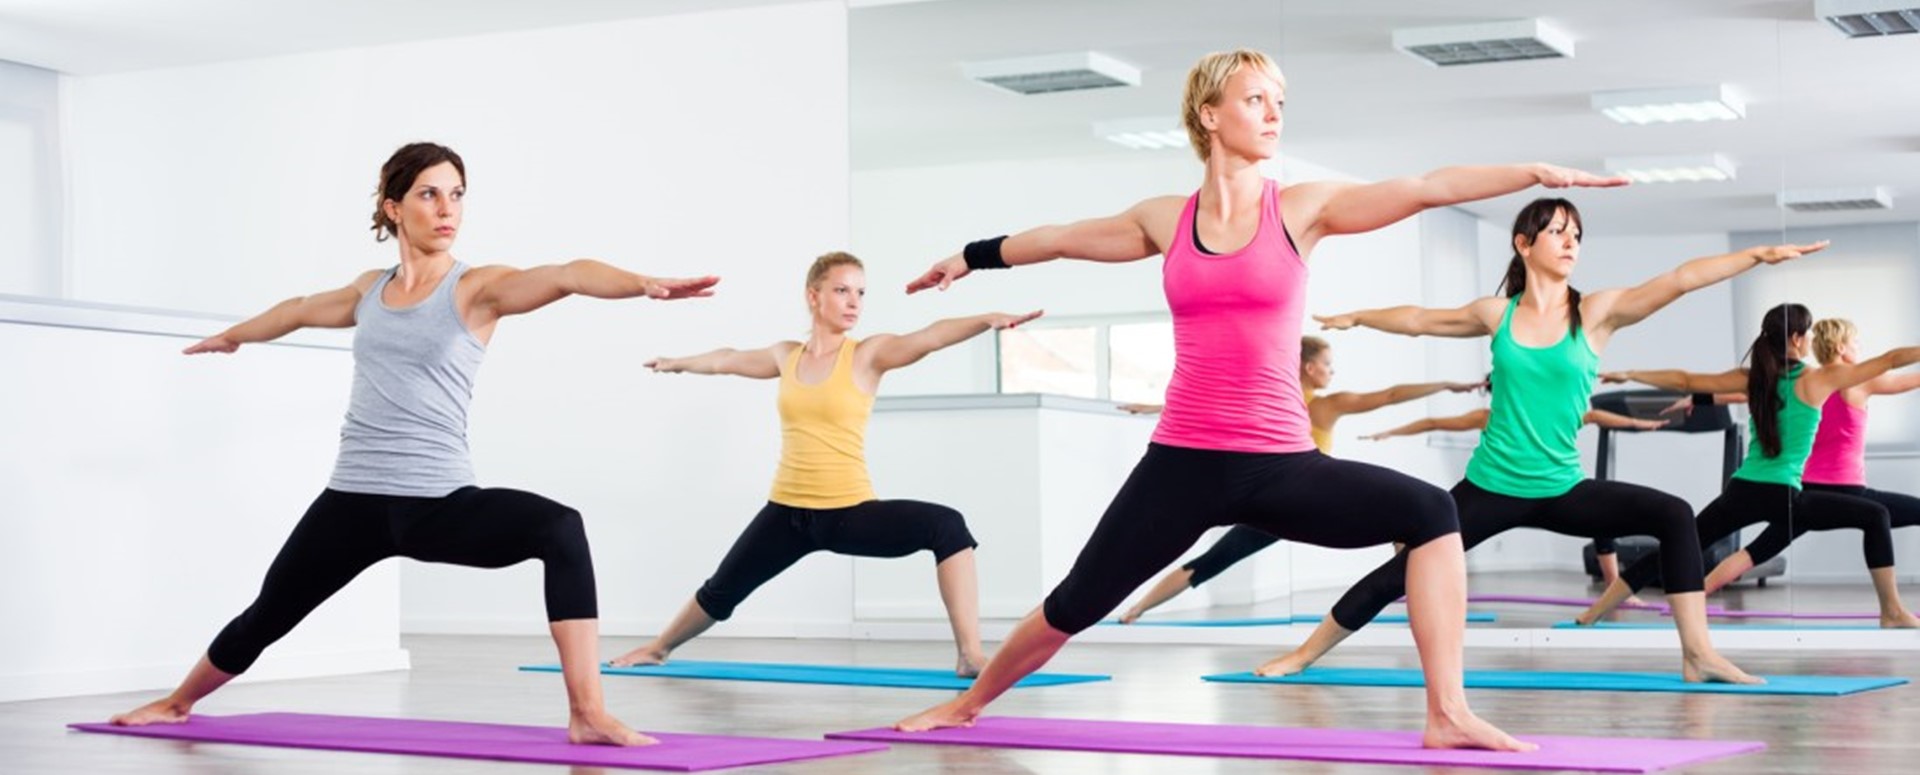 adaptive-yoga-class-aimed-at-helping-traumatic-brain-injury-patients.jpg (1)